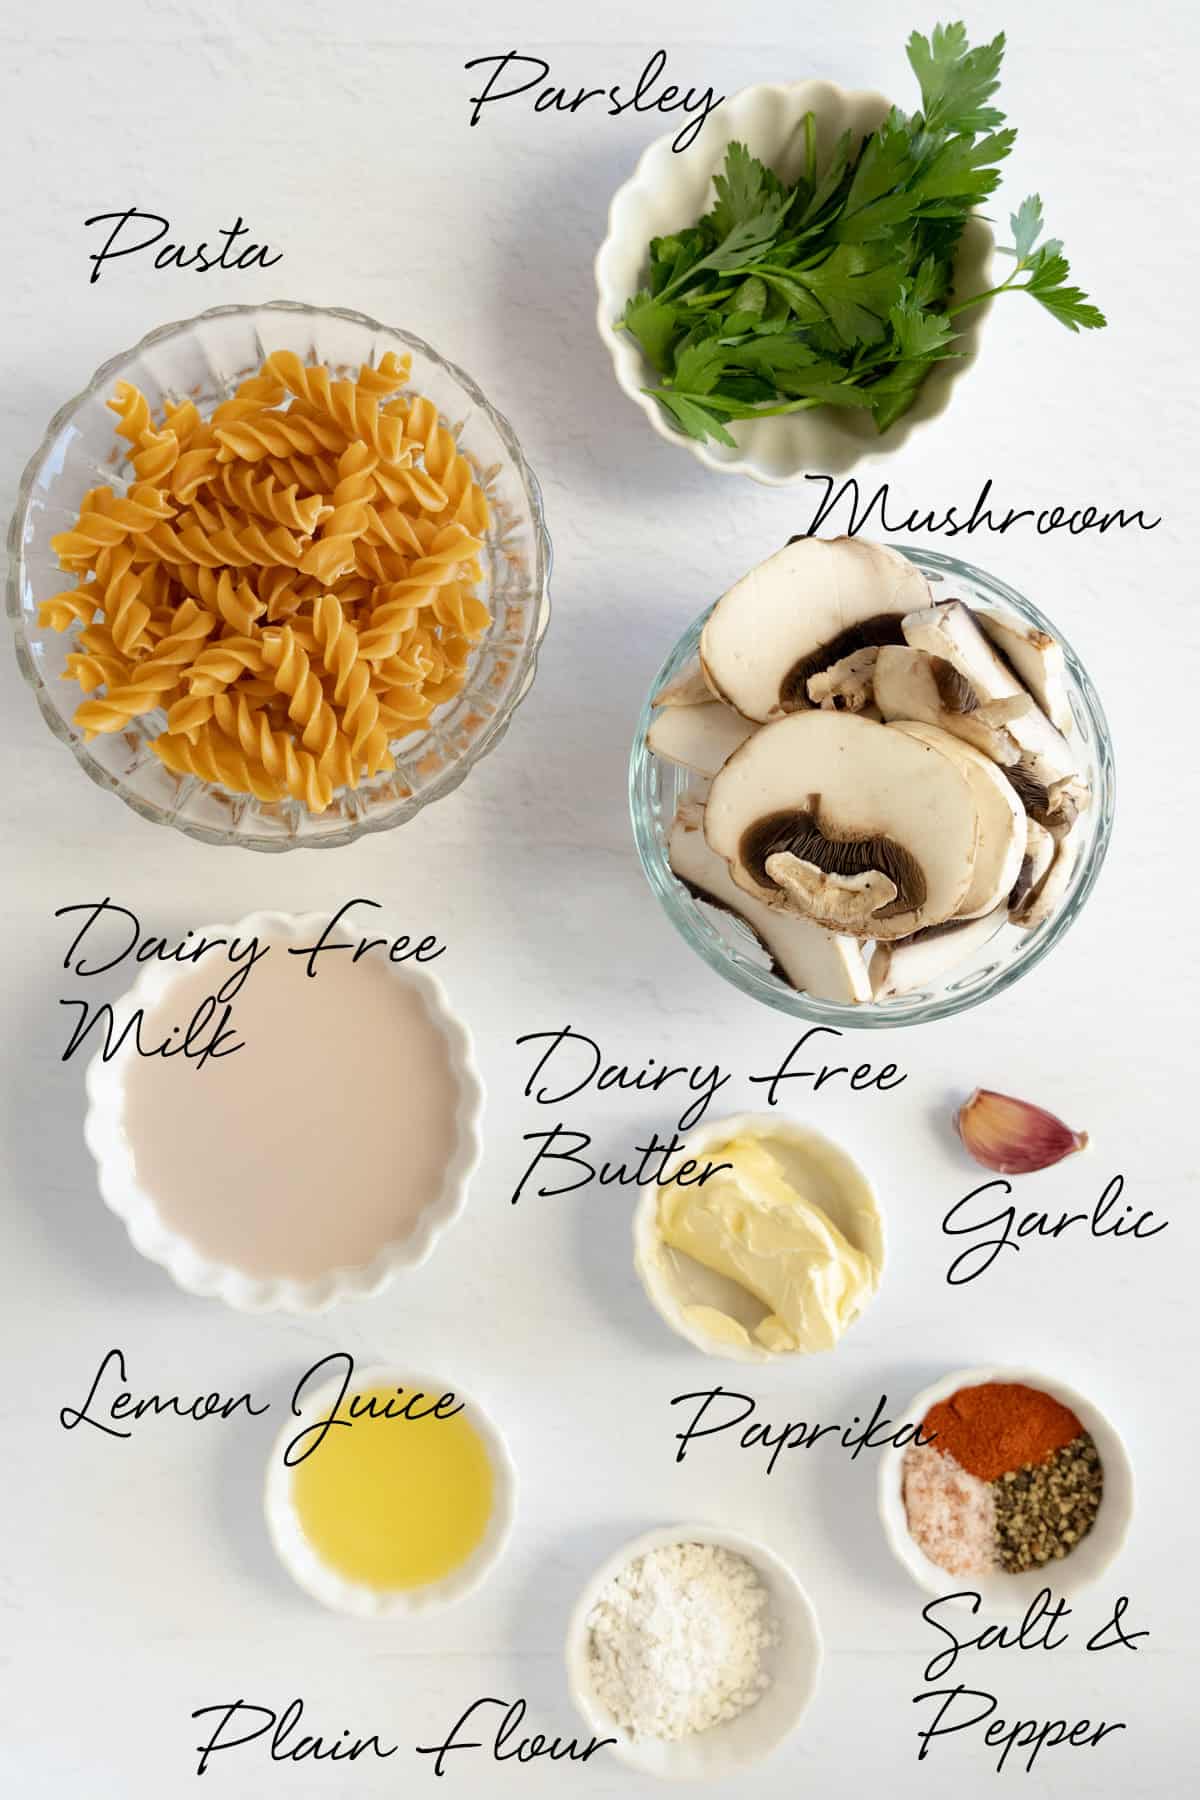 pasta, mushroom, parsley, milk, butter, garlic, lemon juice, salt, pepper, paprika and flour in white bowls